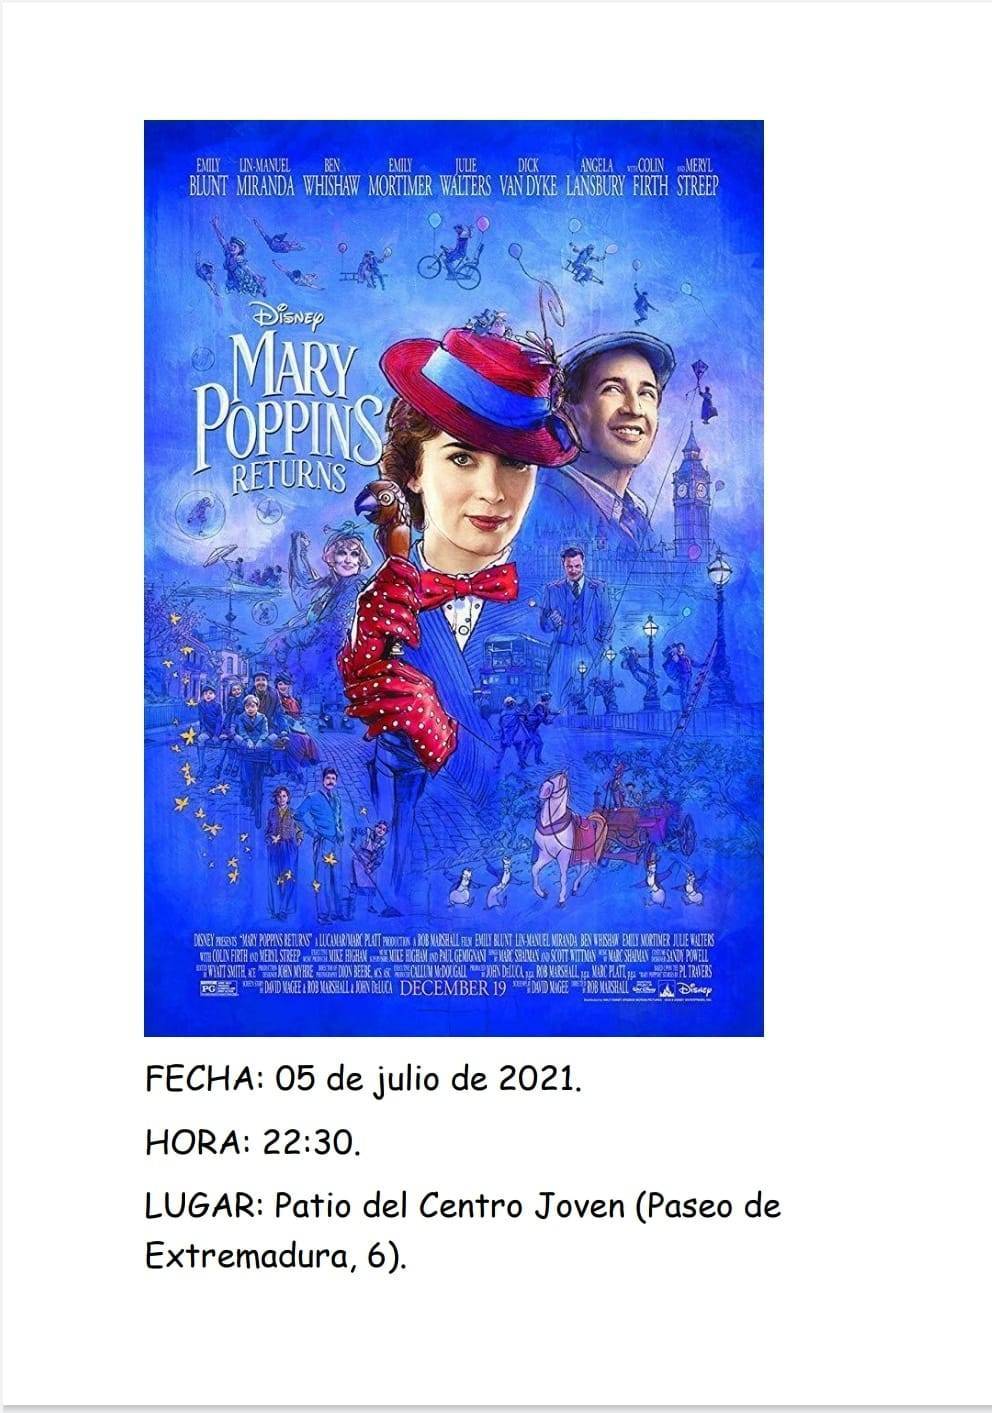 Mary Poppins Returns (2021) - Cañamero (Cáceres)